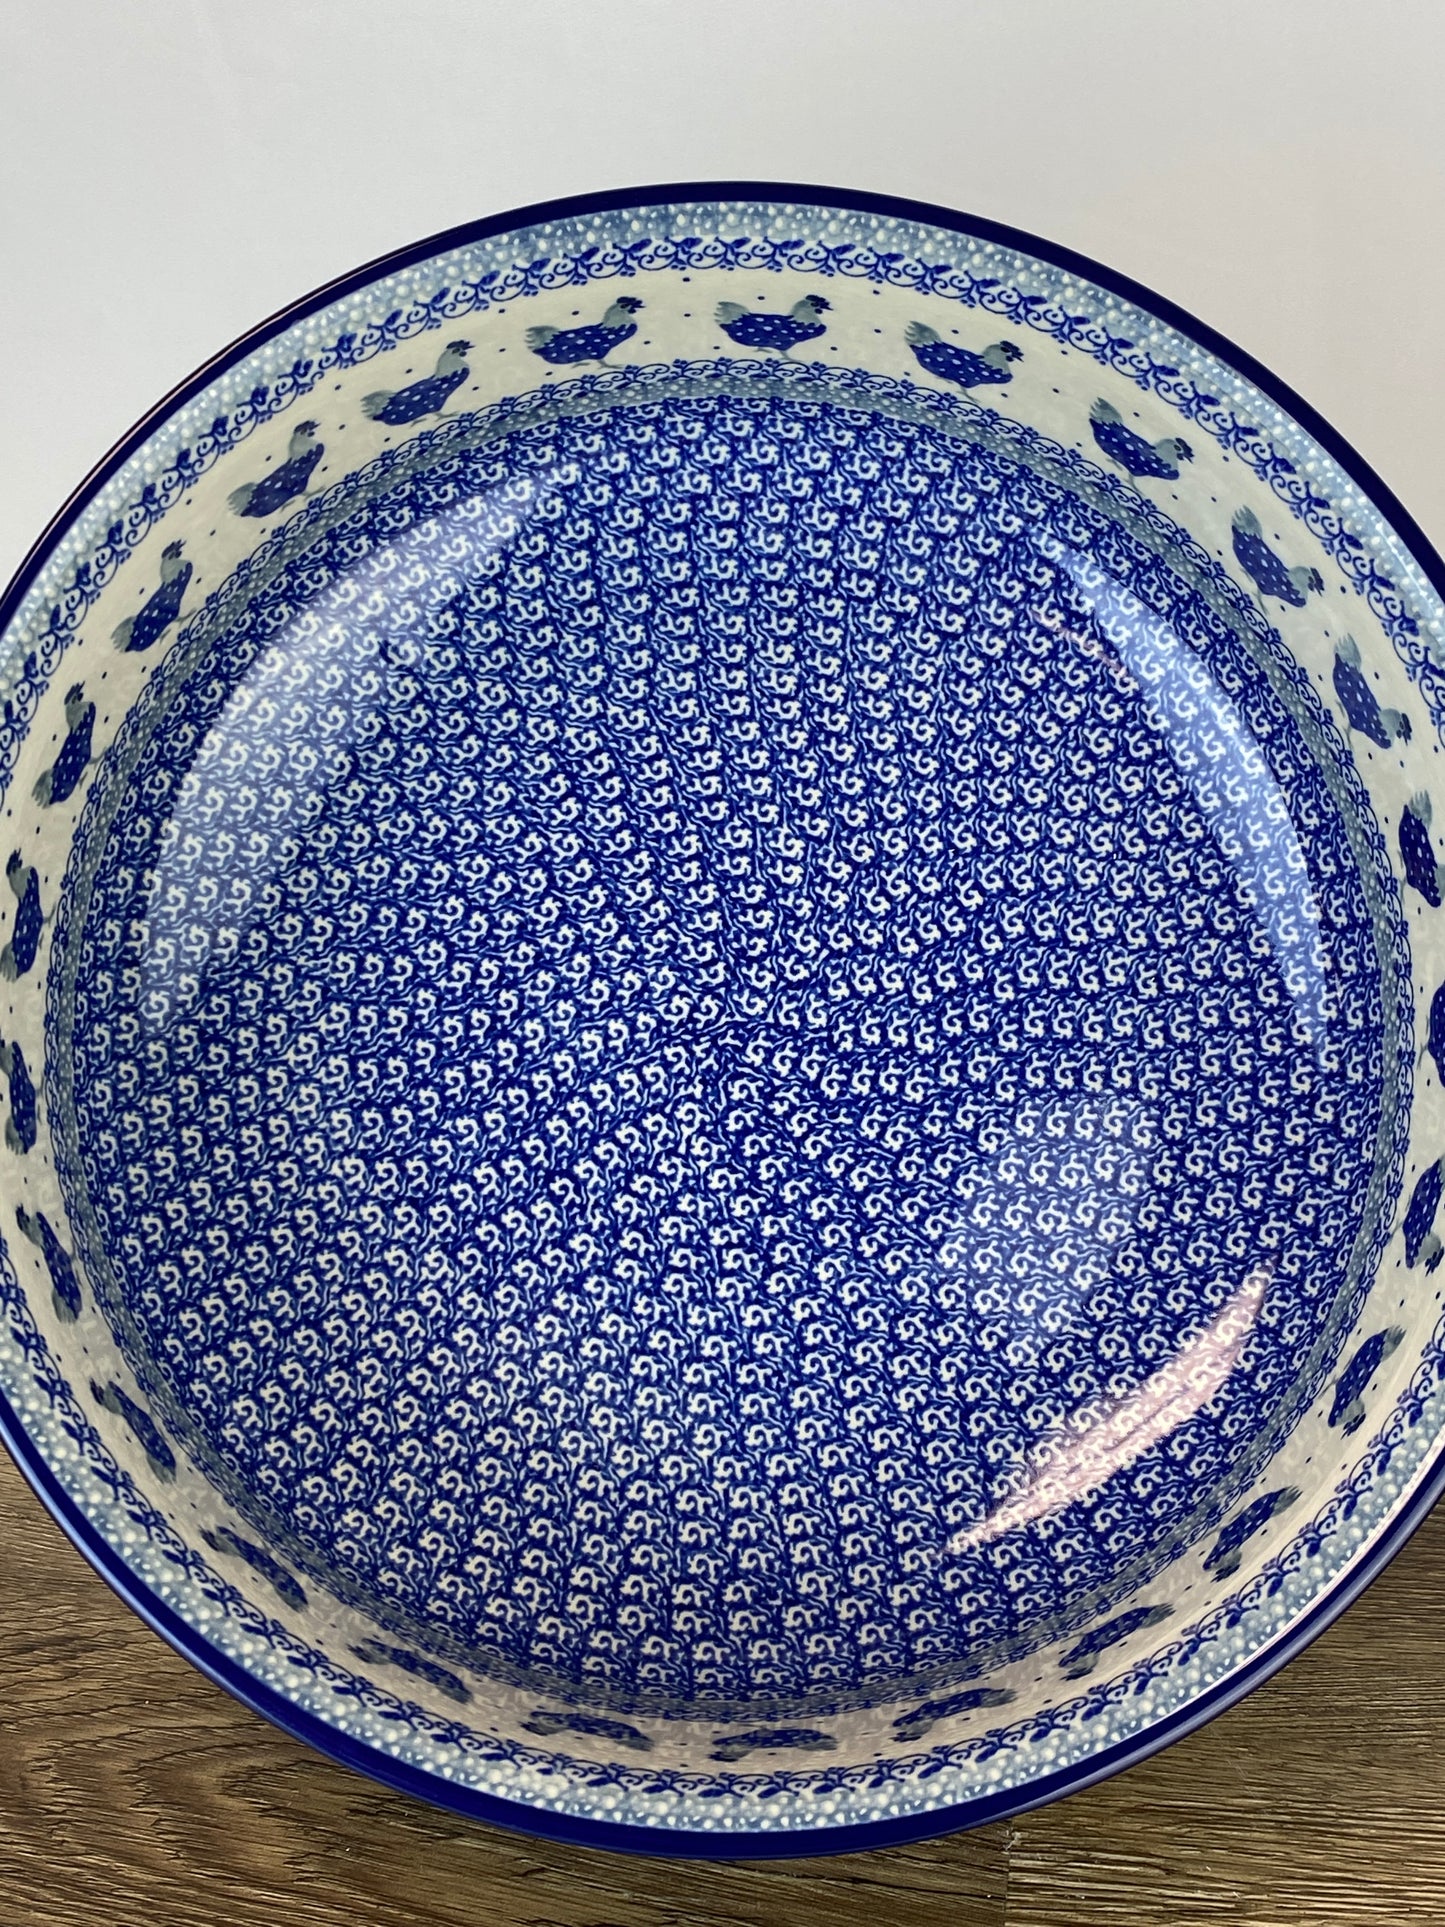 Large Serving Bowl - Shape 116 - Pattern 2597